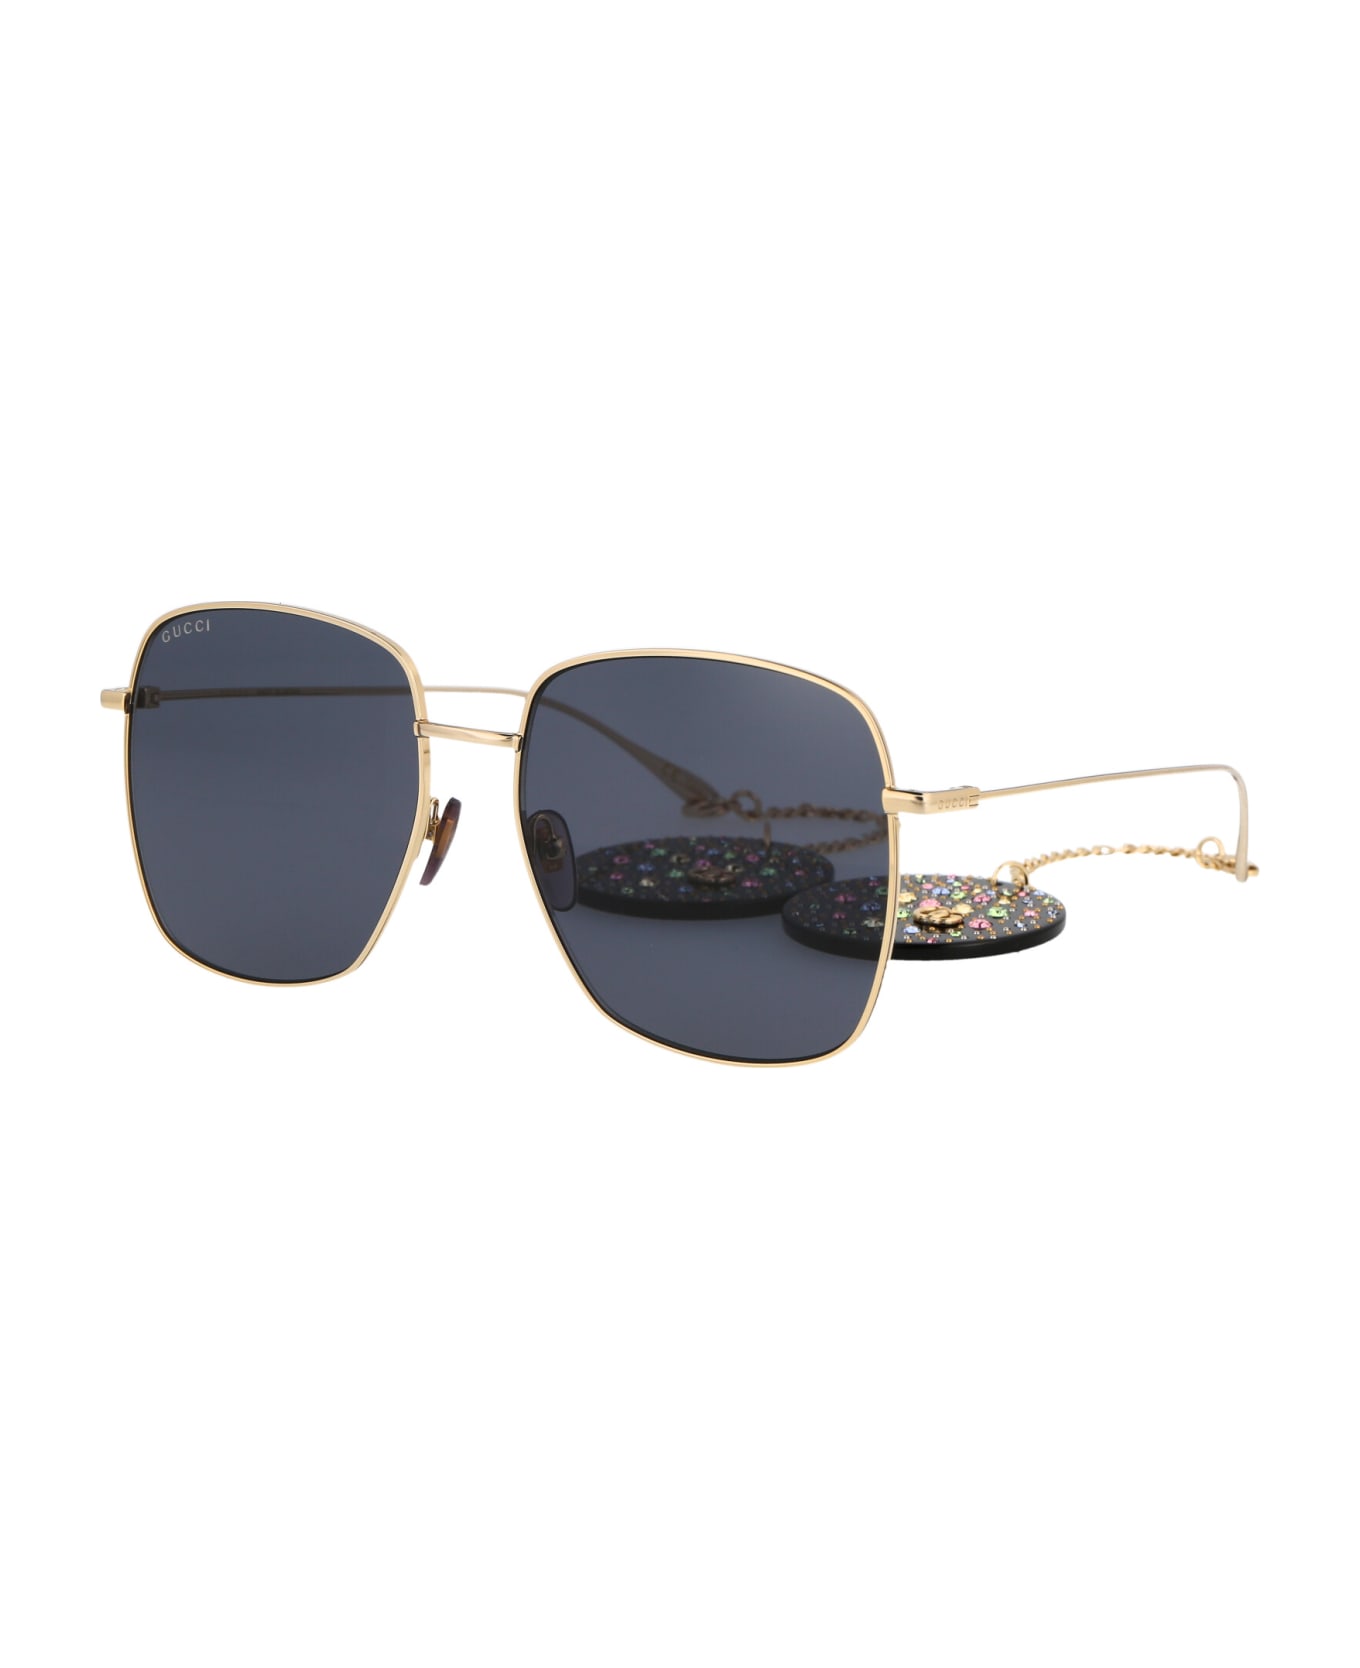 Gucci Eyewear Gg1031s Sunglasses - 009 GOLD GOLD GREY サングラス